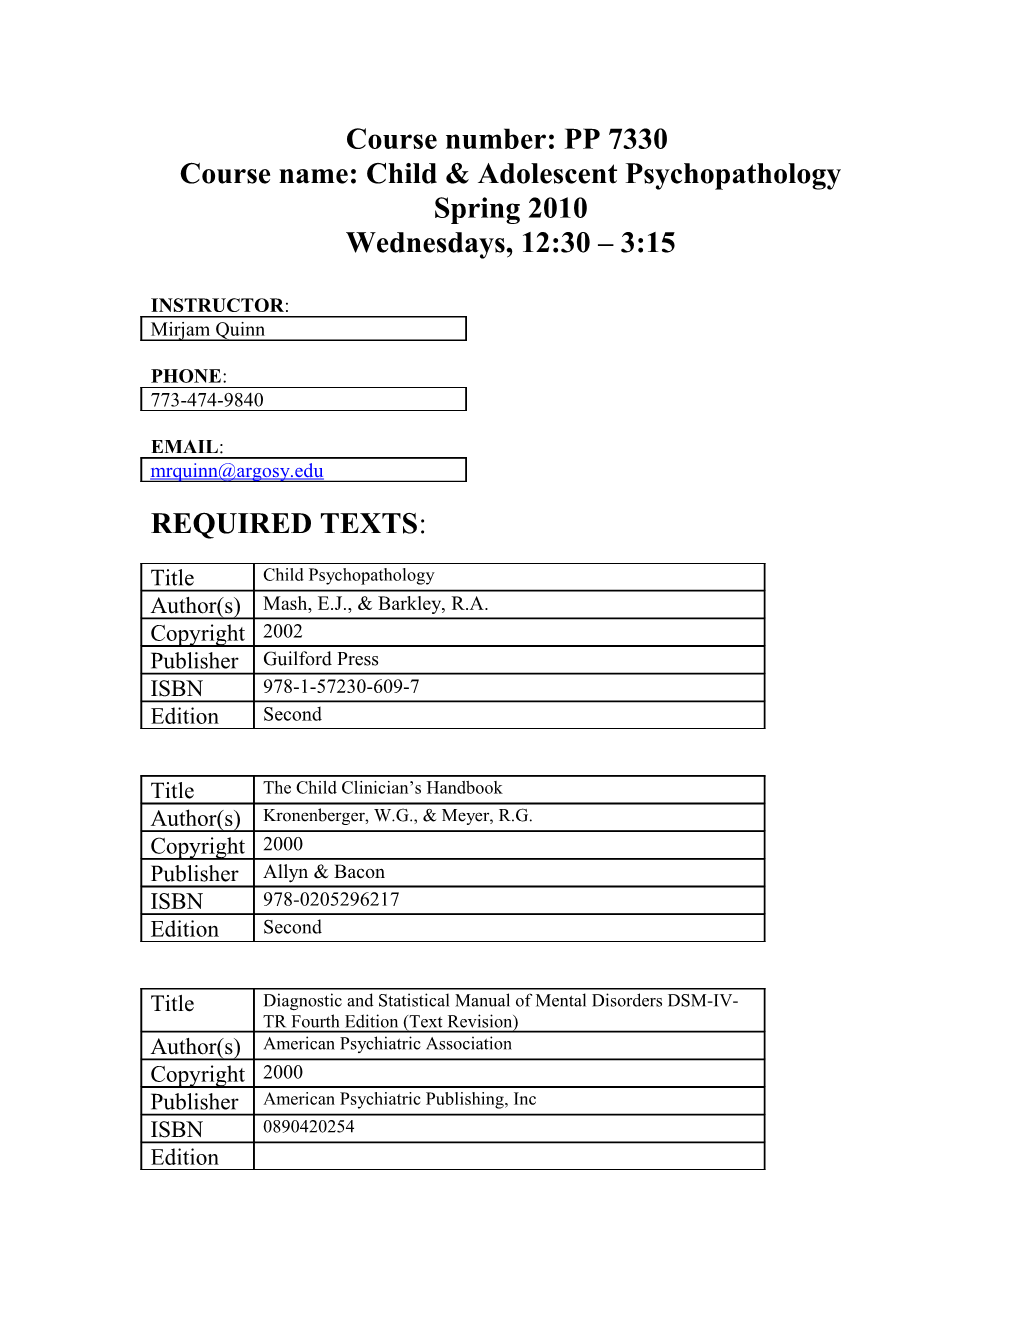 Course Name: Child & Adolescent Psychopathology